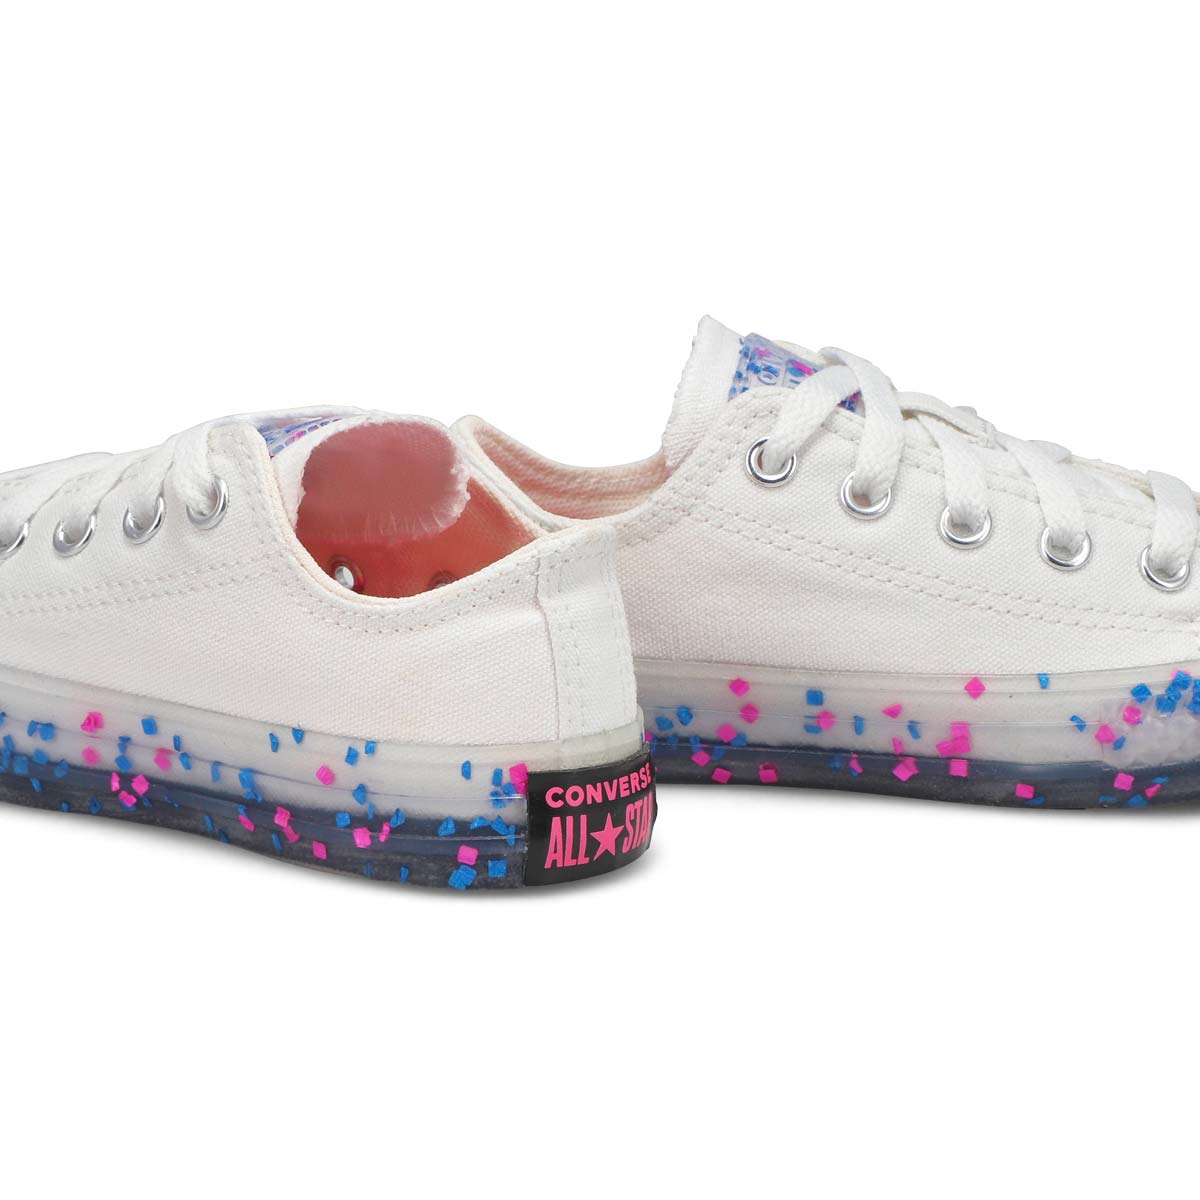 Girls' Chuck Taylor All Star Confetti sneaker